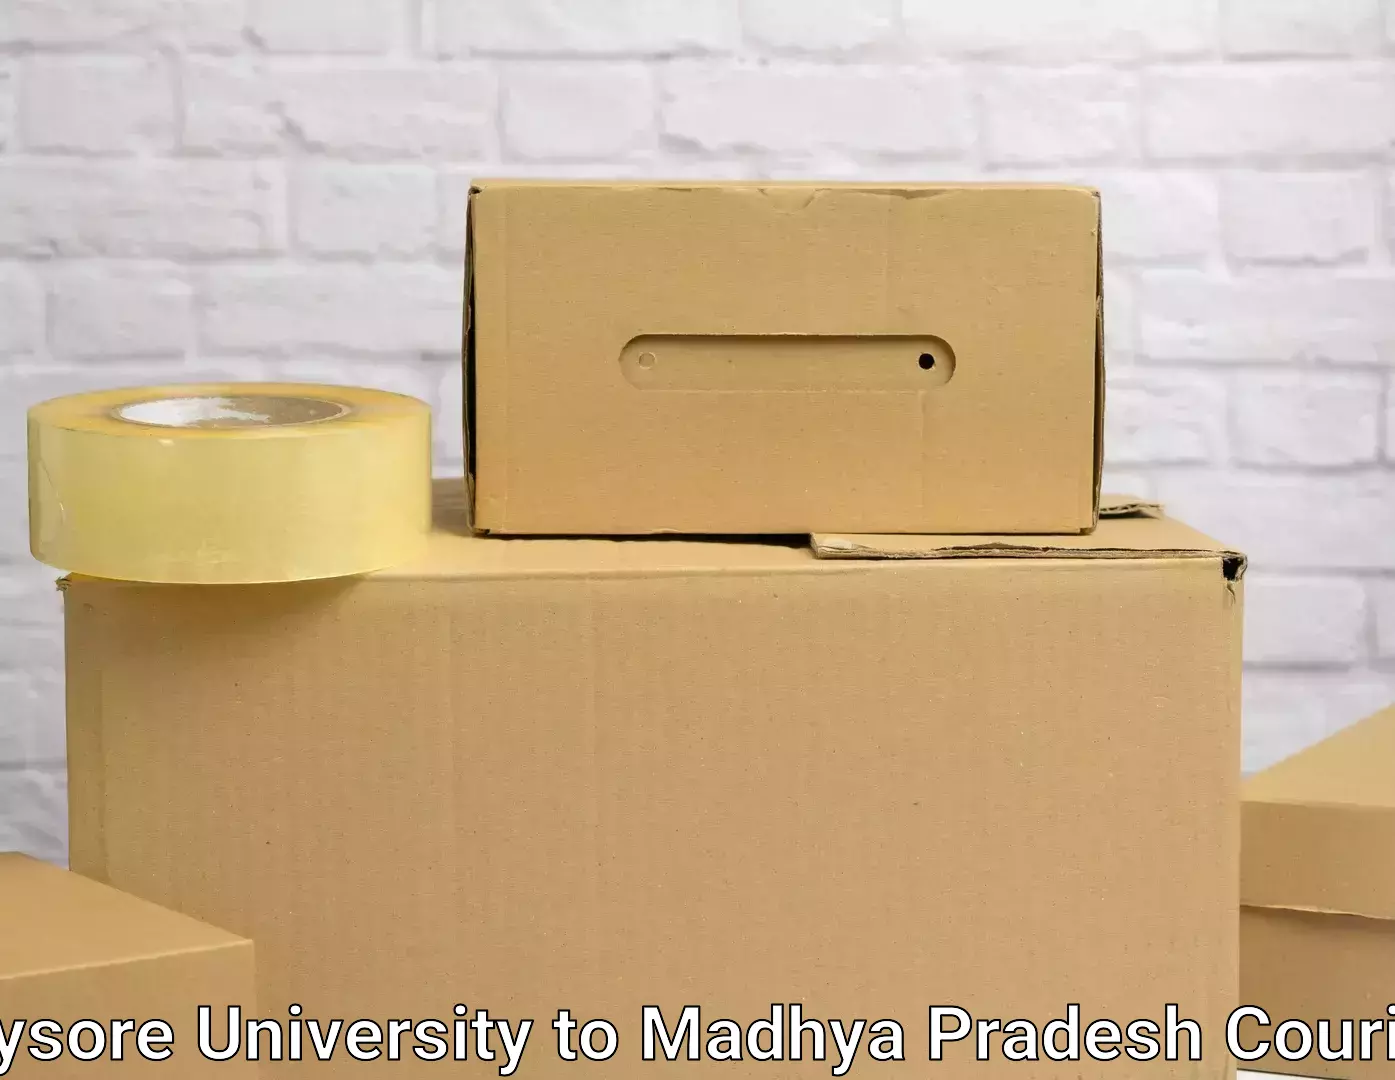 Moving and storage services Mysore University to Badnagar